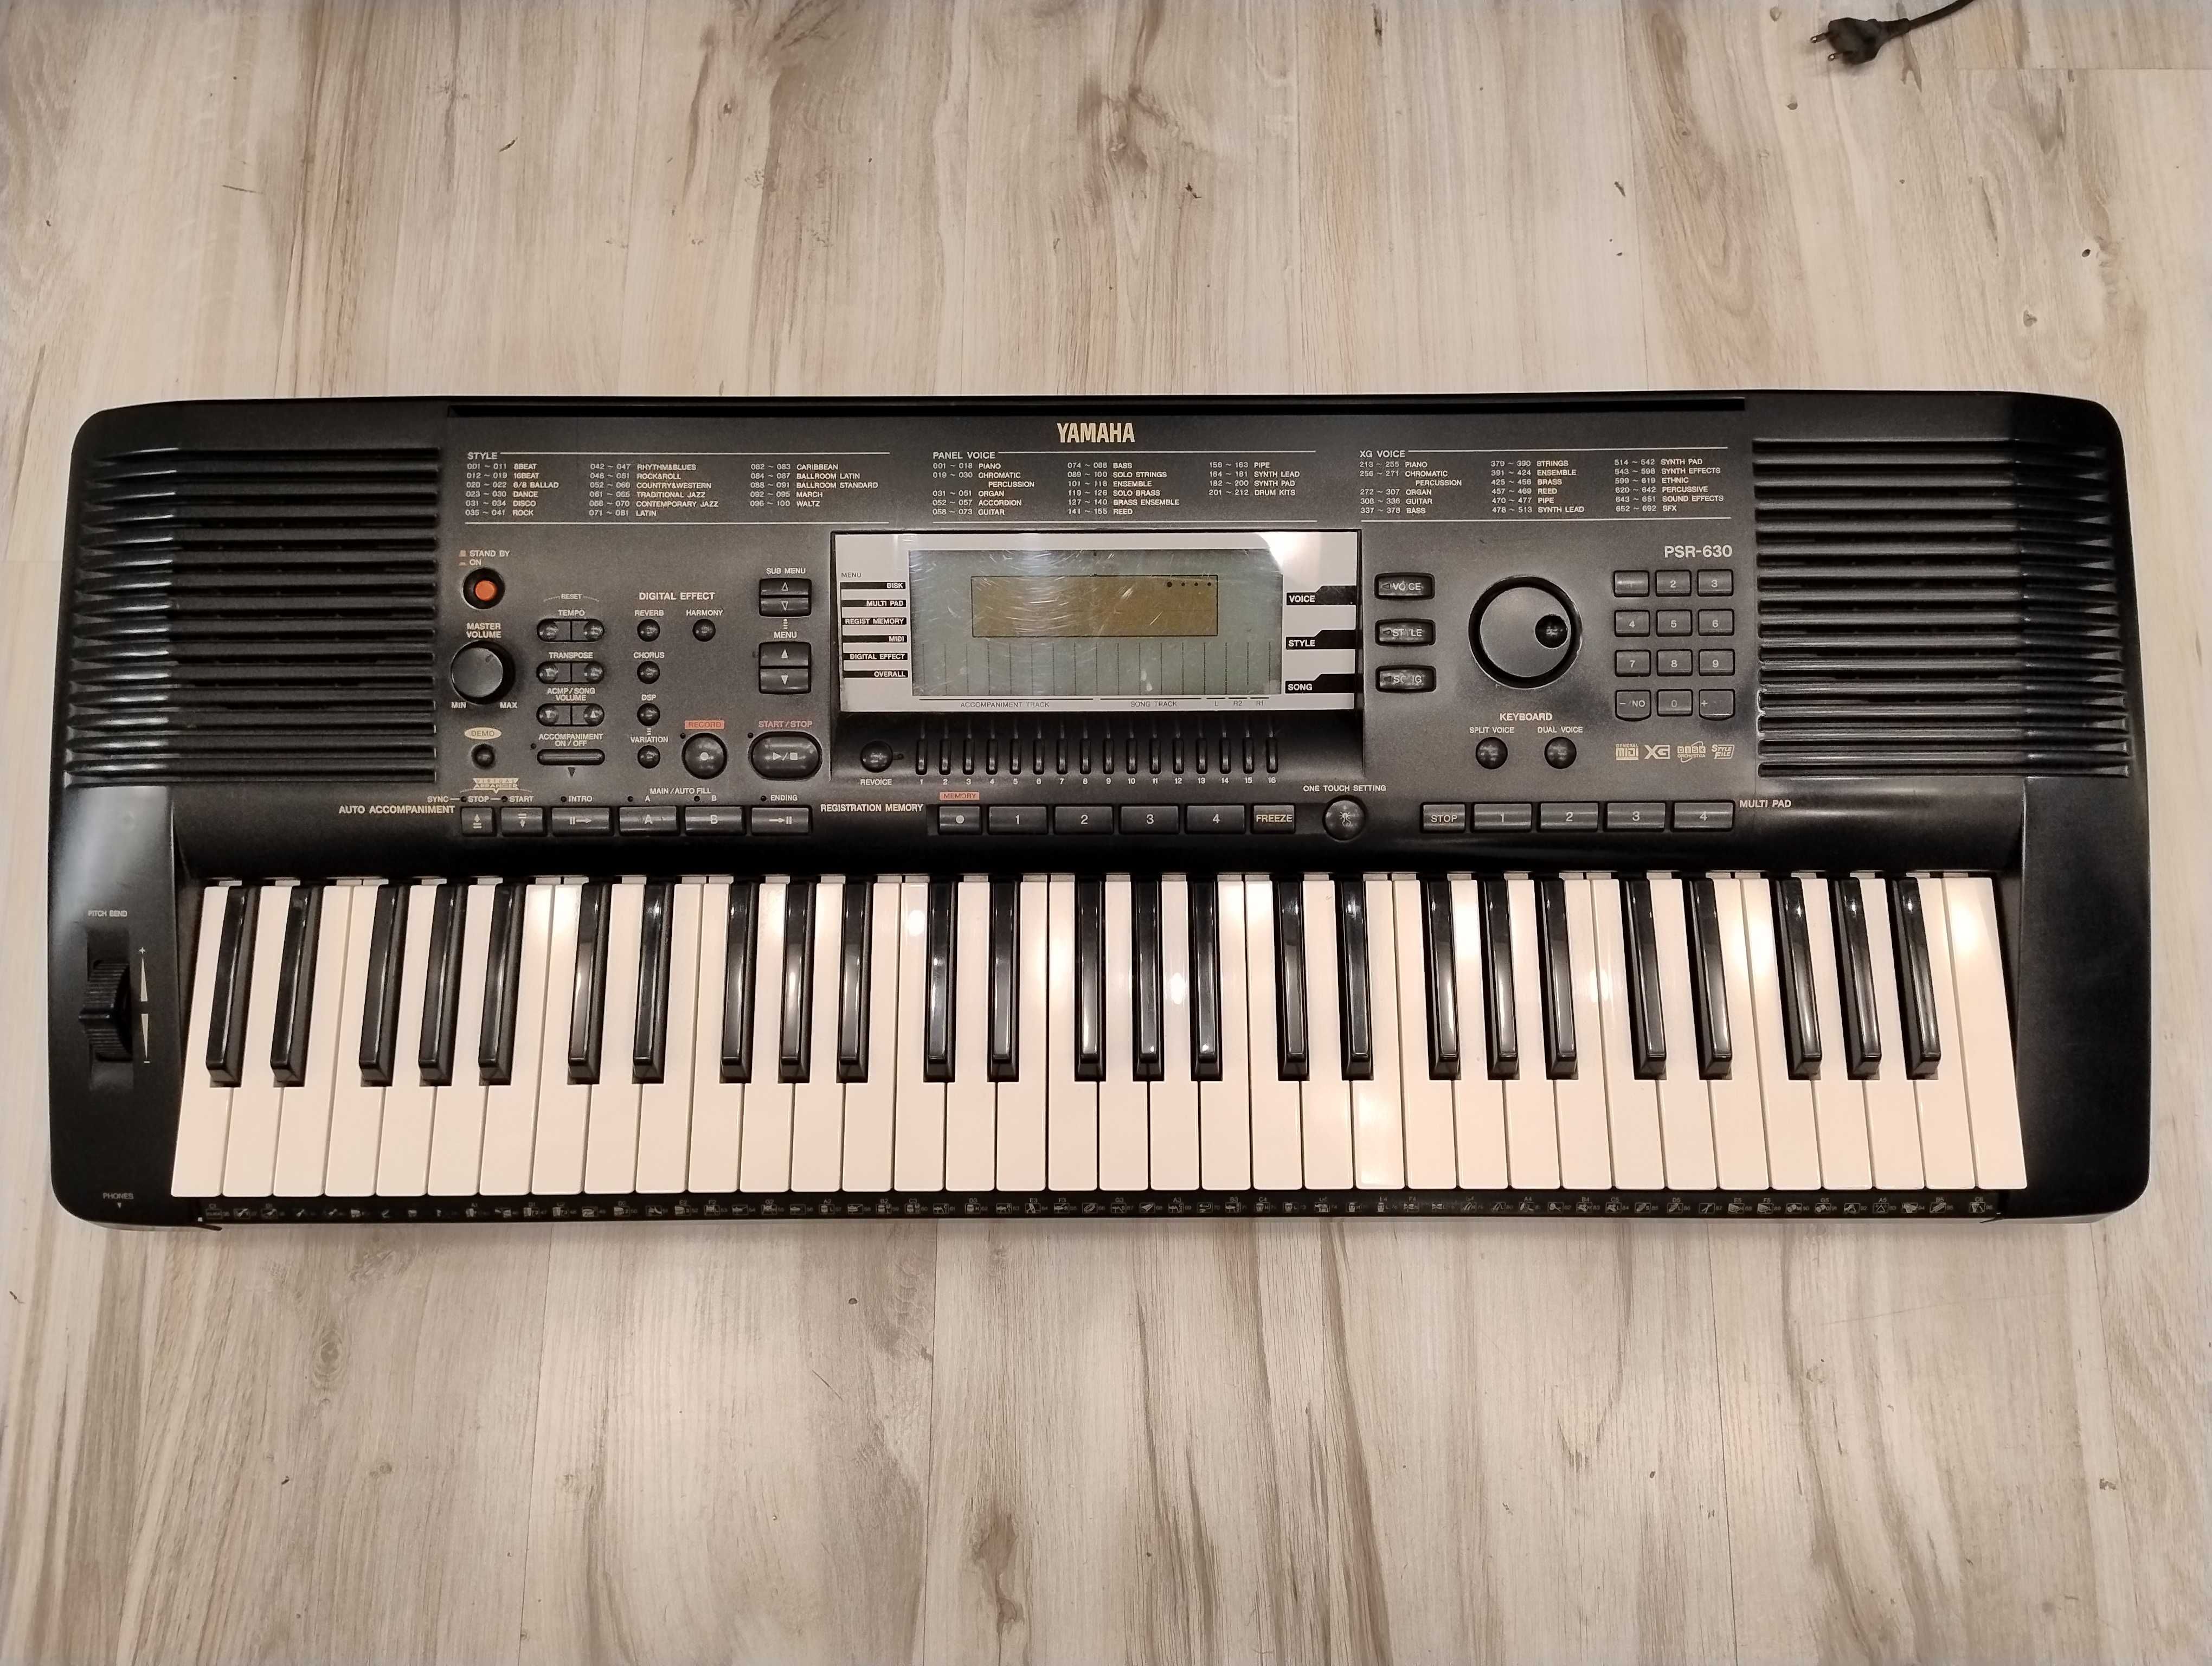 Keyboard / organy Yamaha psr630